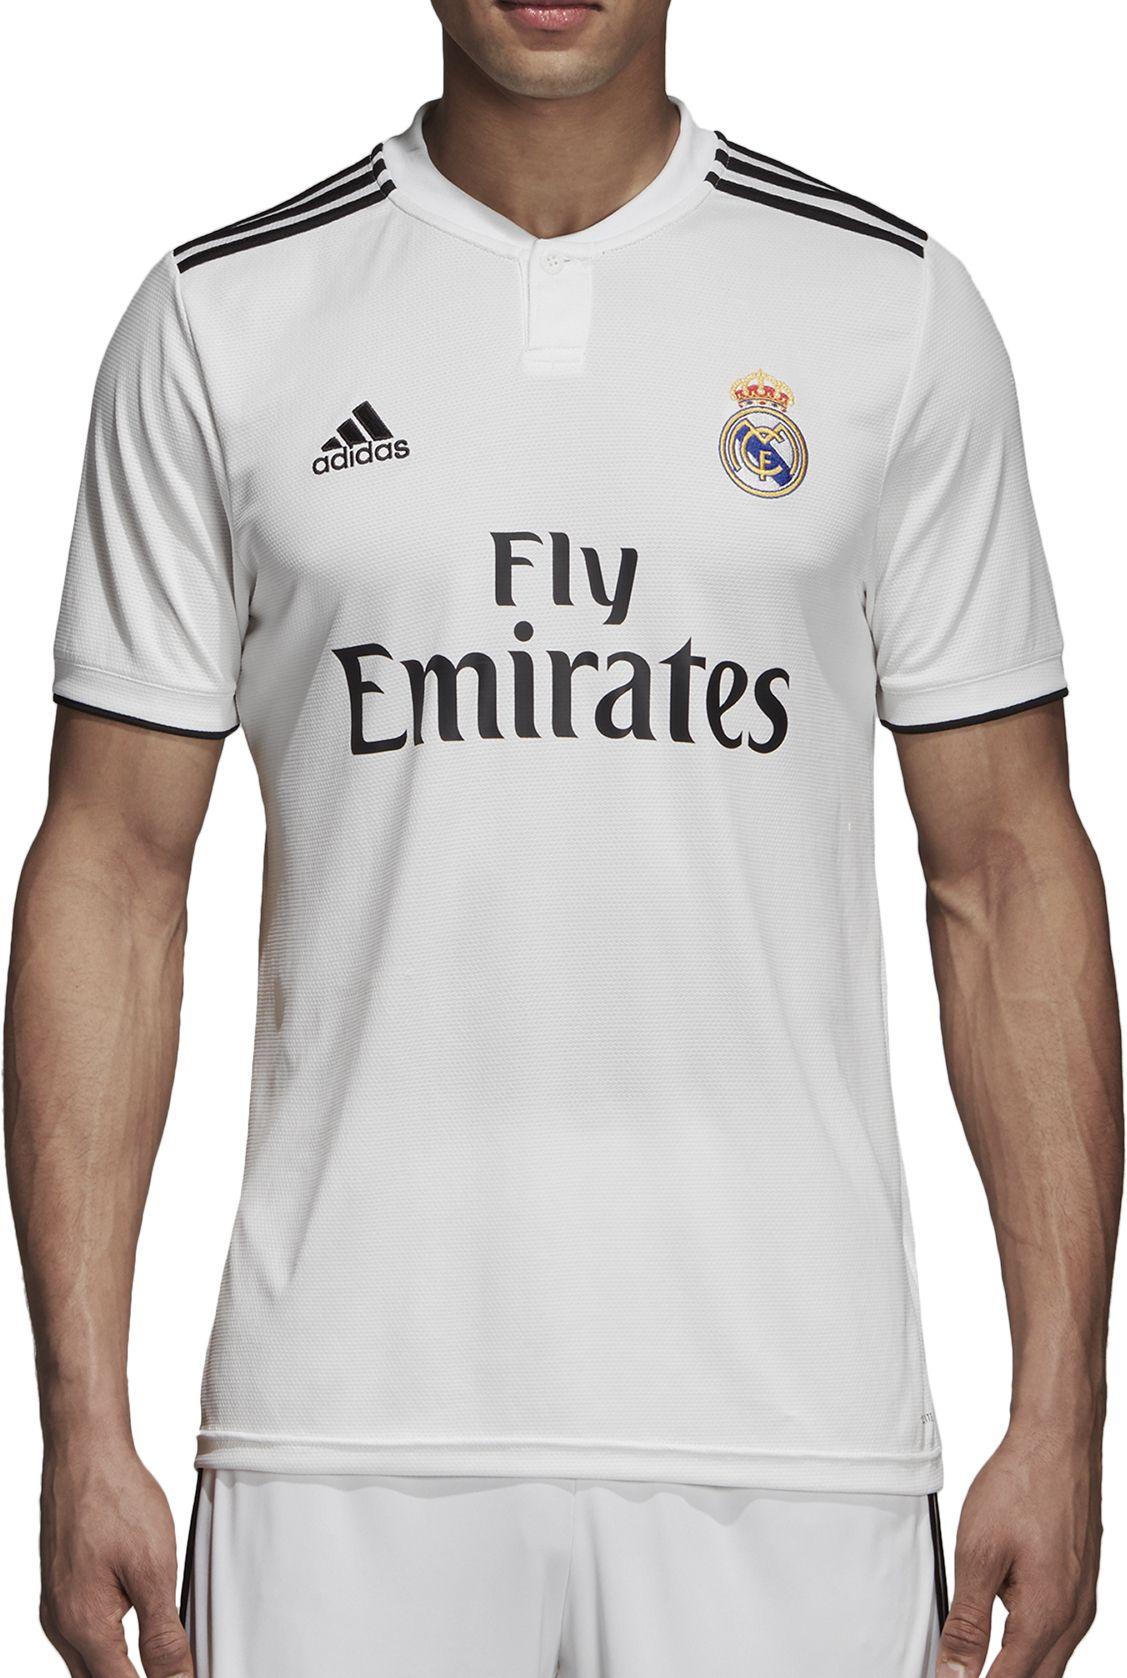 Adidas Real Madrid 2018 Logo - adidas Real Madrid Home 2018/19 Mens Football Shirt | eBay